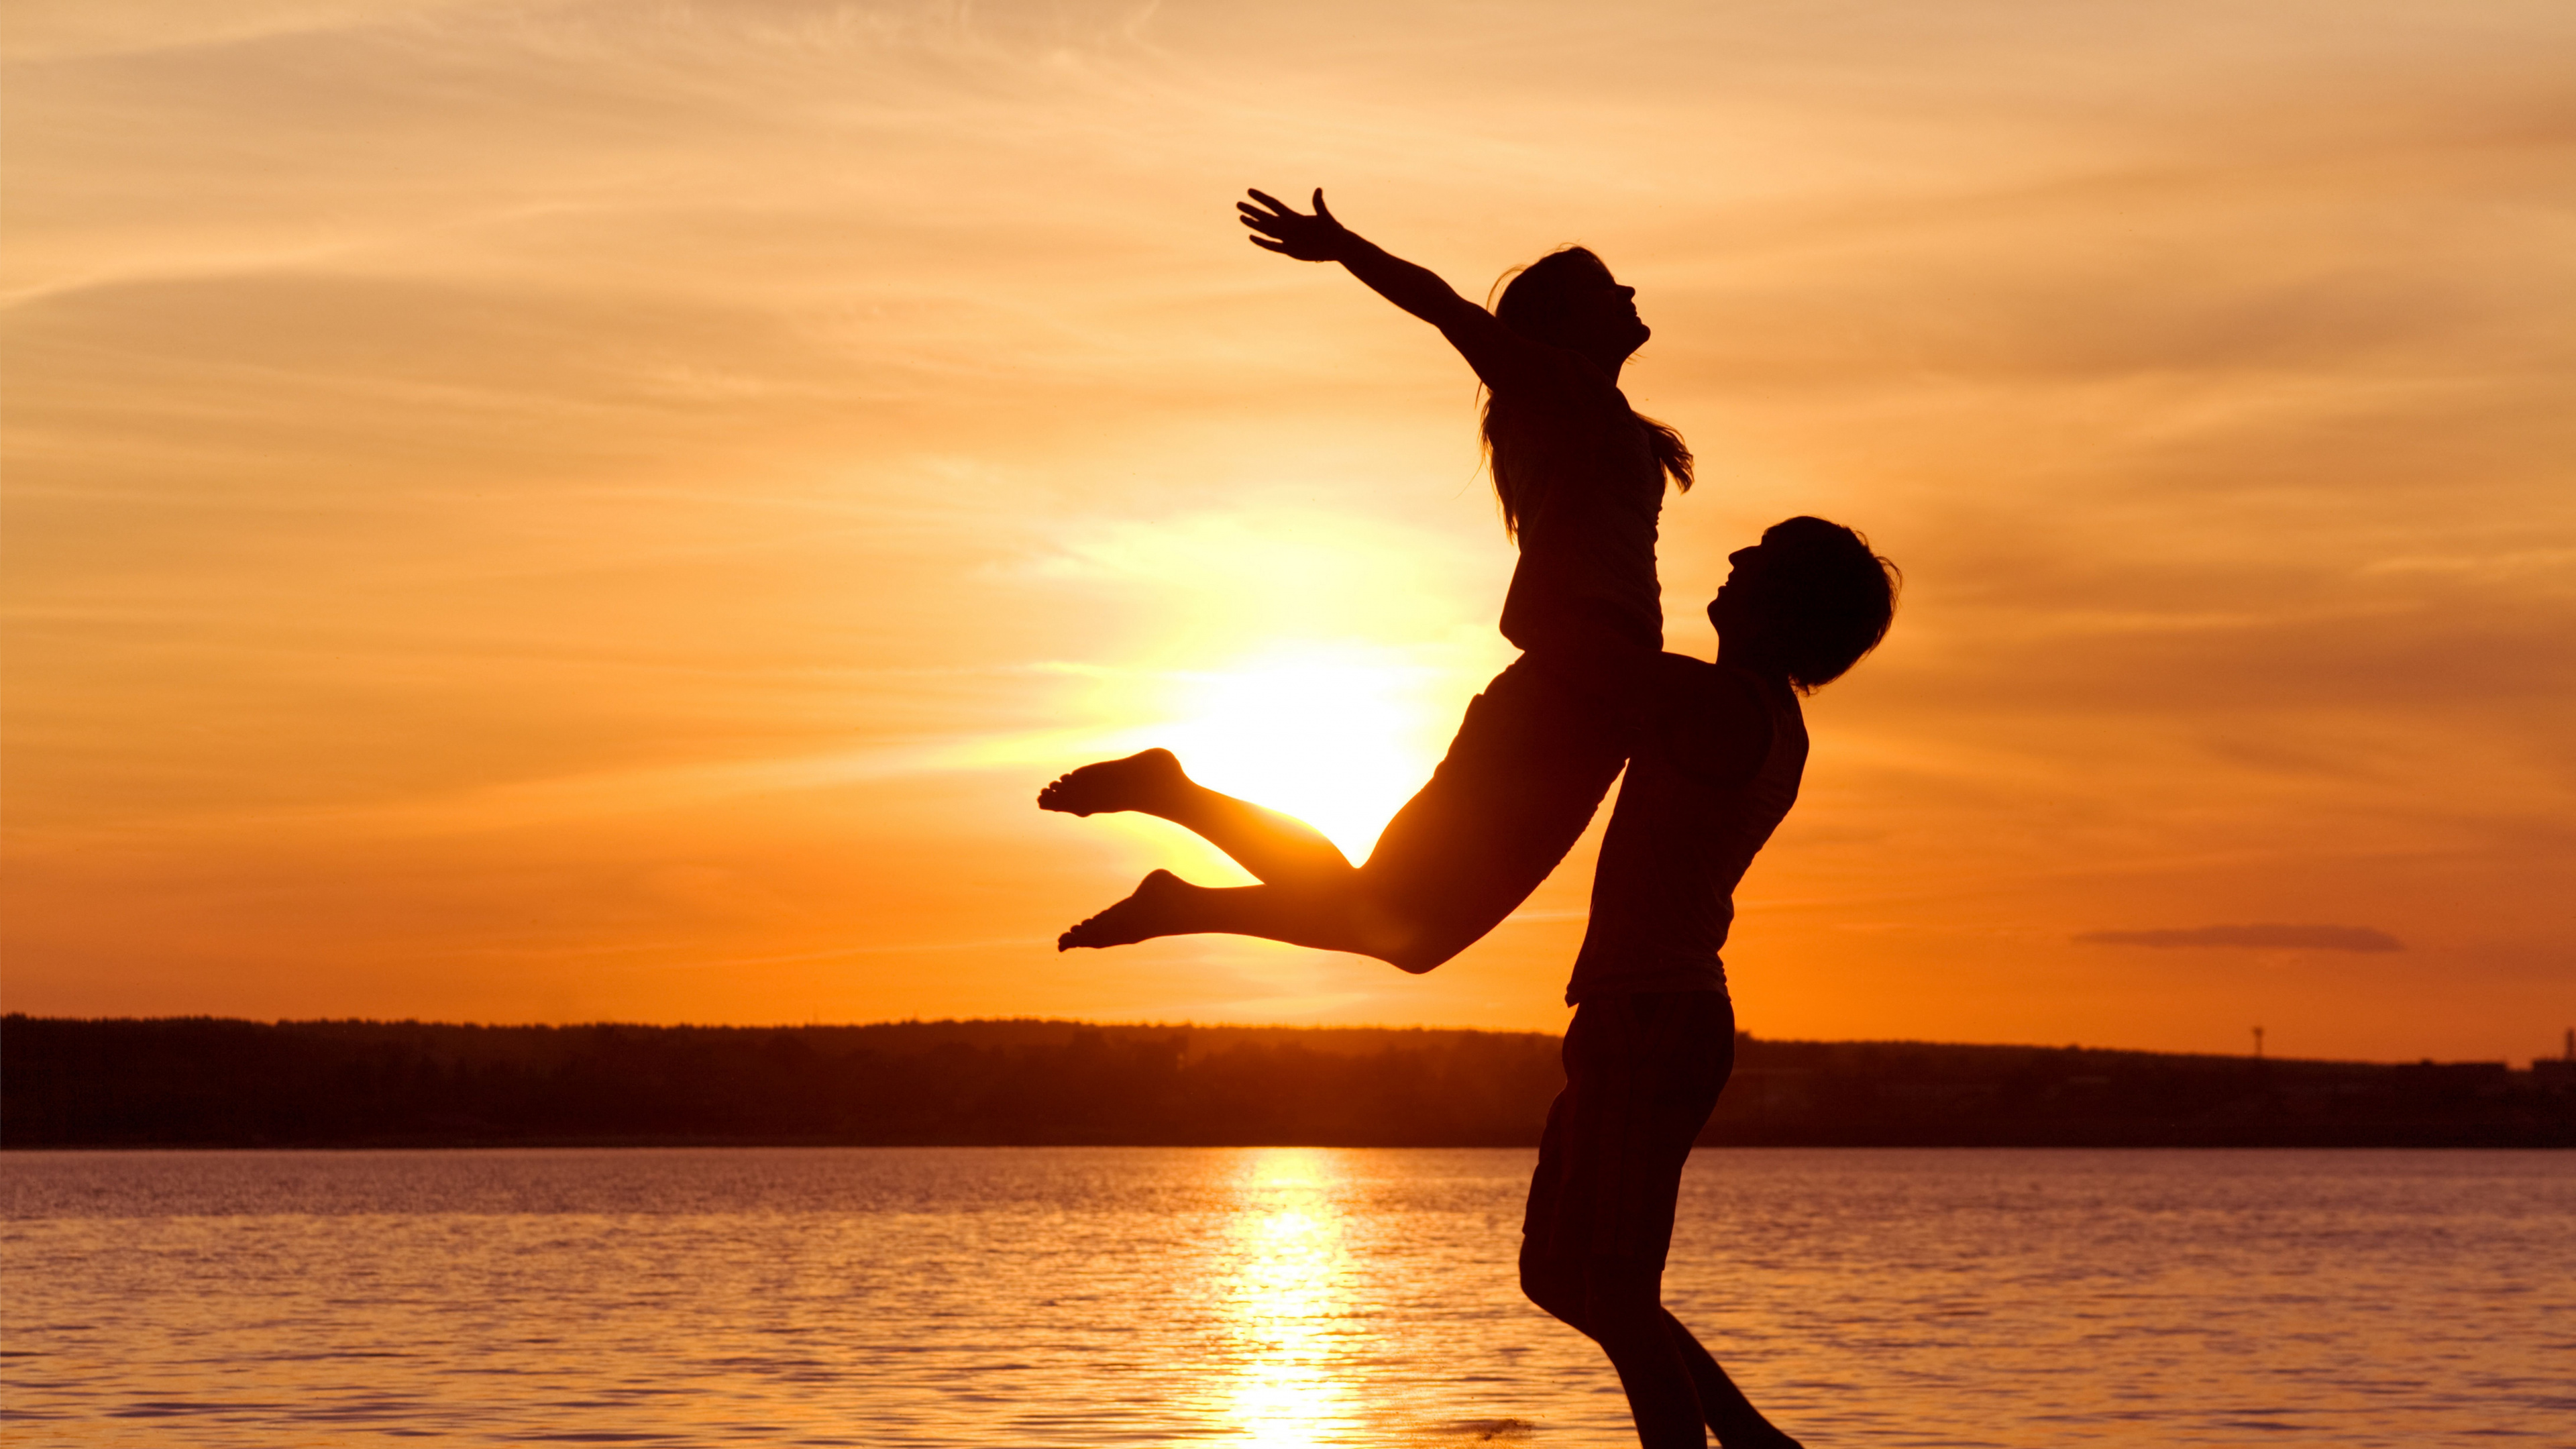 Romance, Water, Sunset, Fun, Jumping. Wallpaper in 3840x2160 Resolution